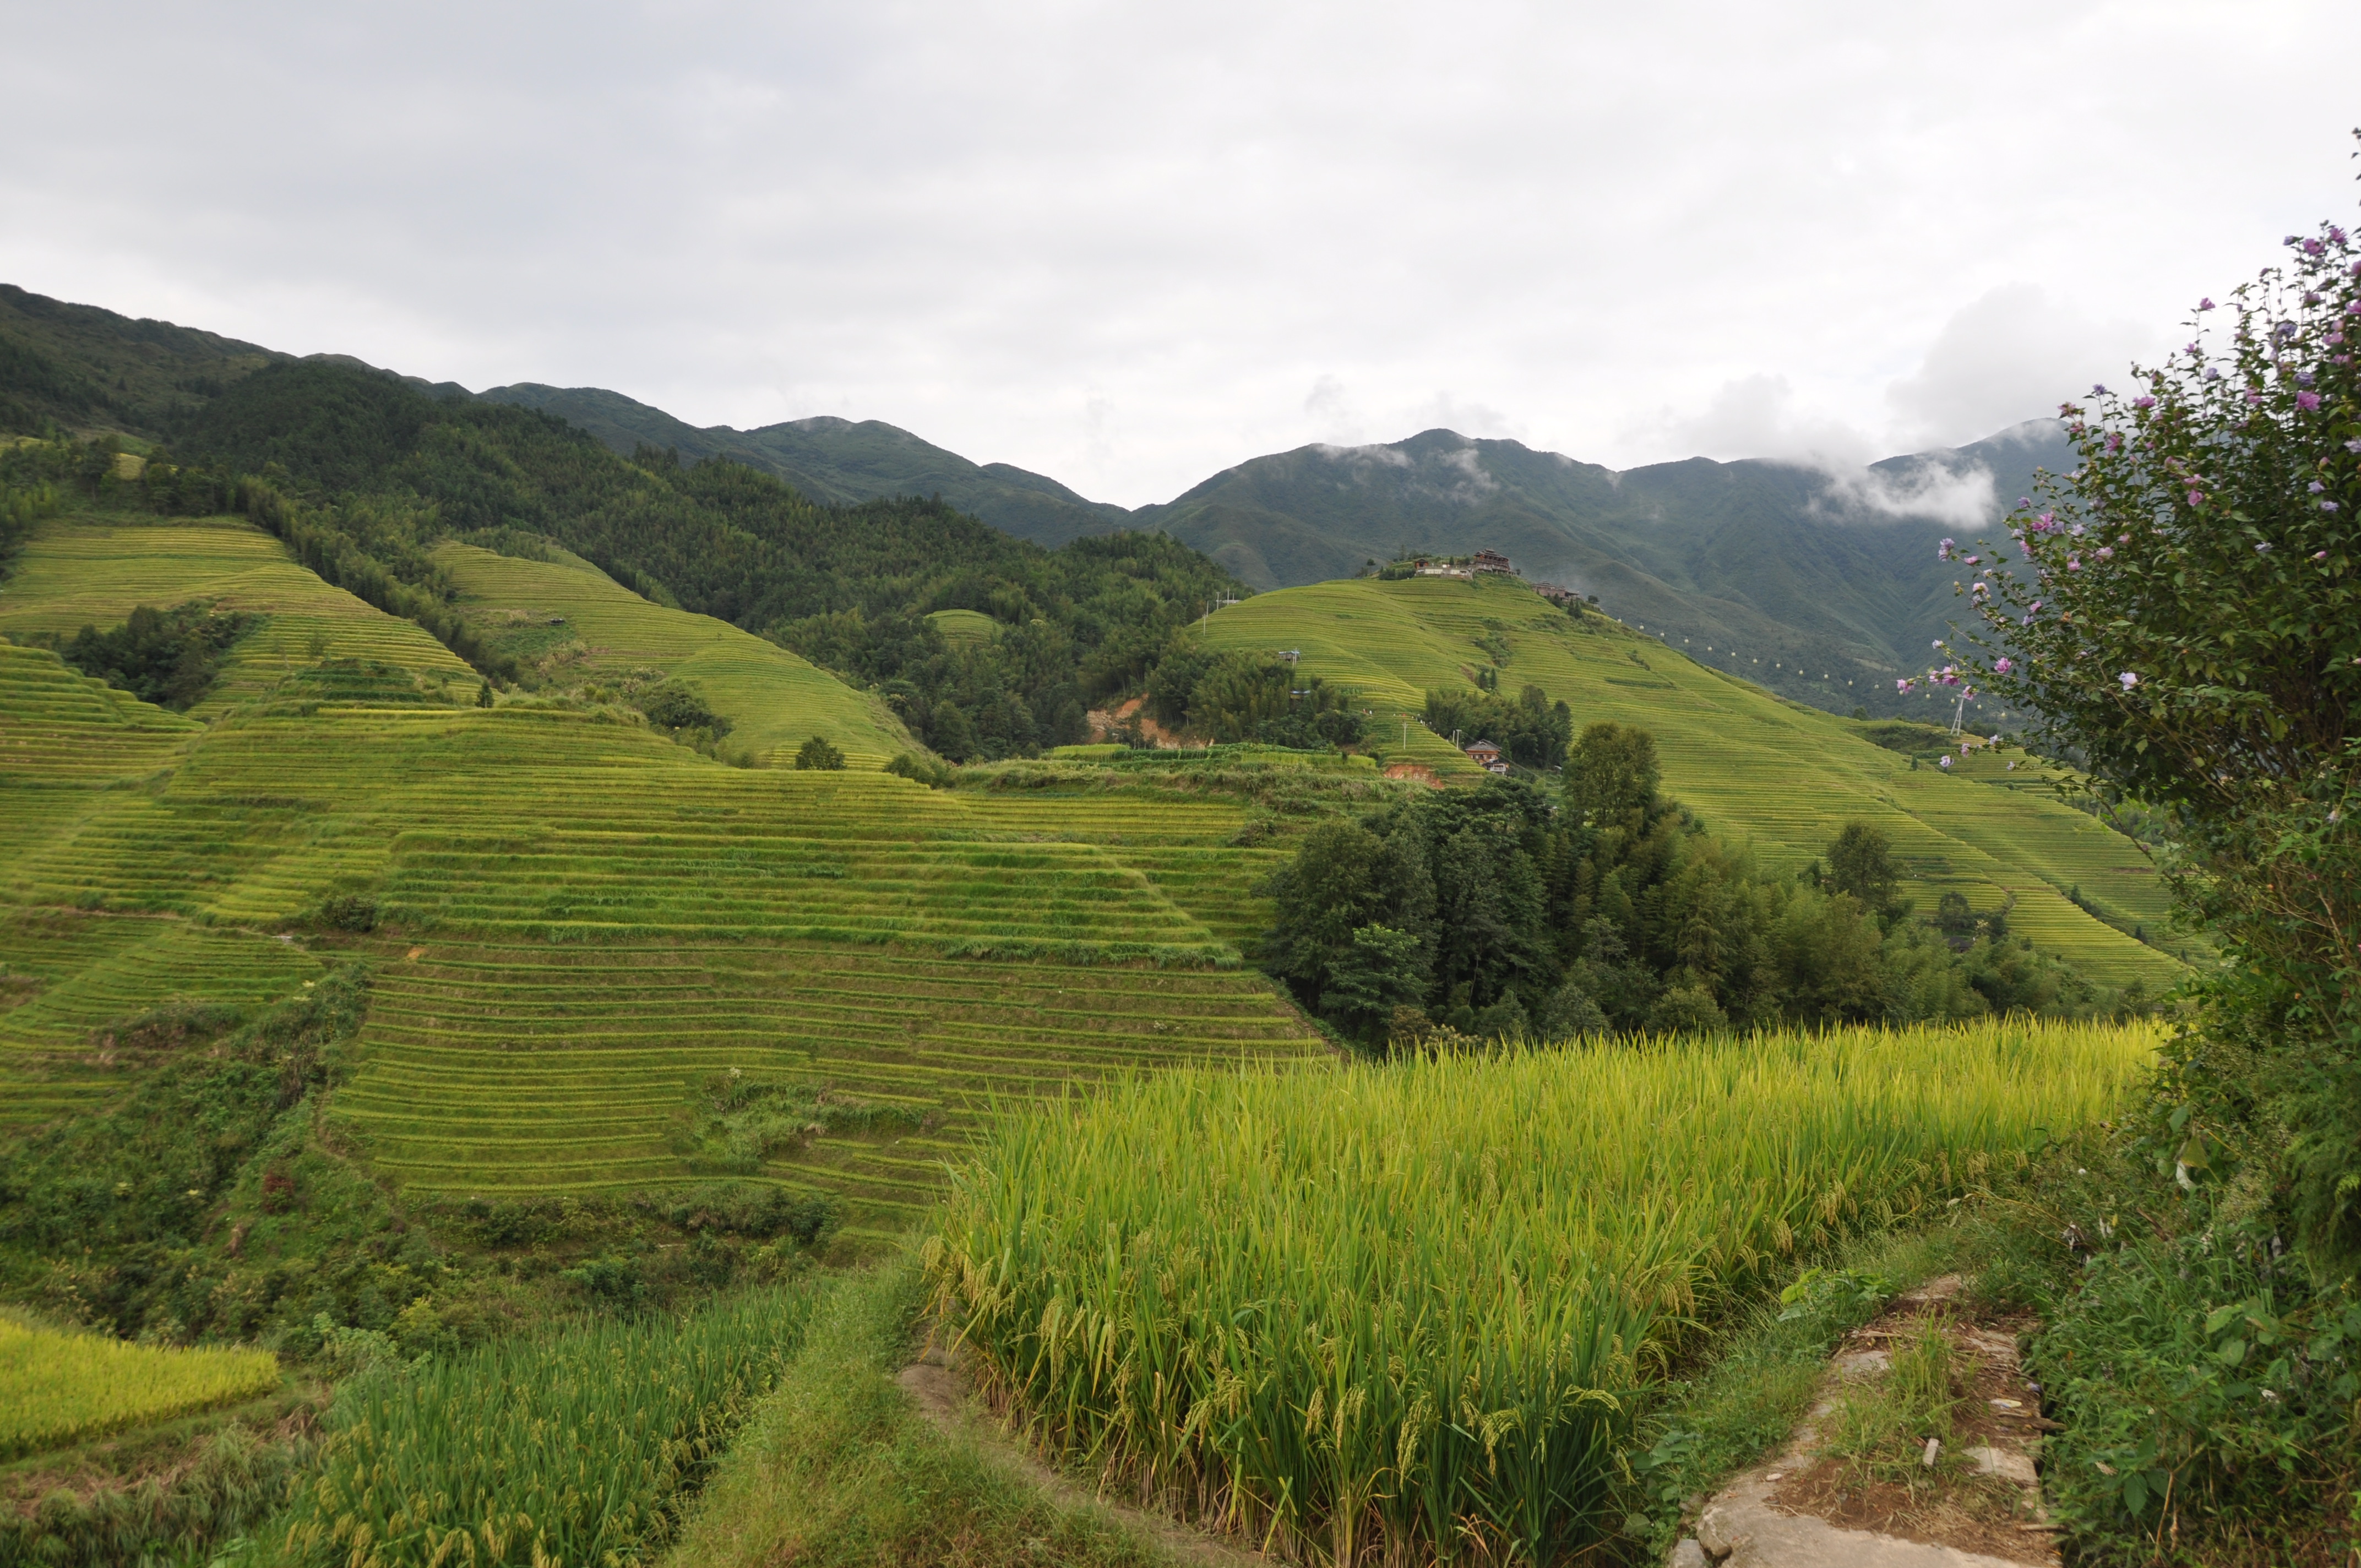 Two Travel The World - Longji Rice Terraces